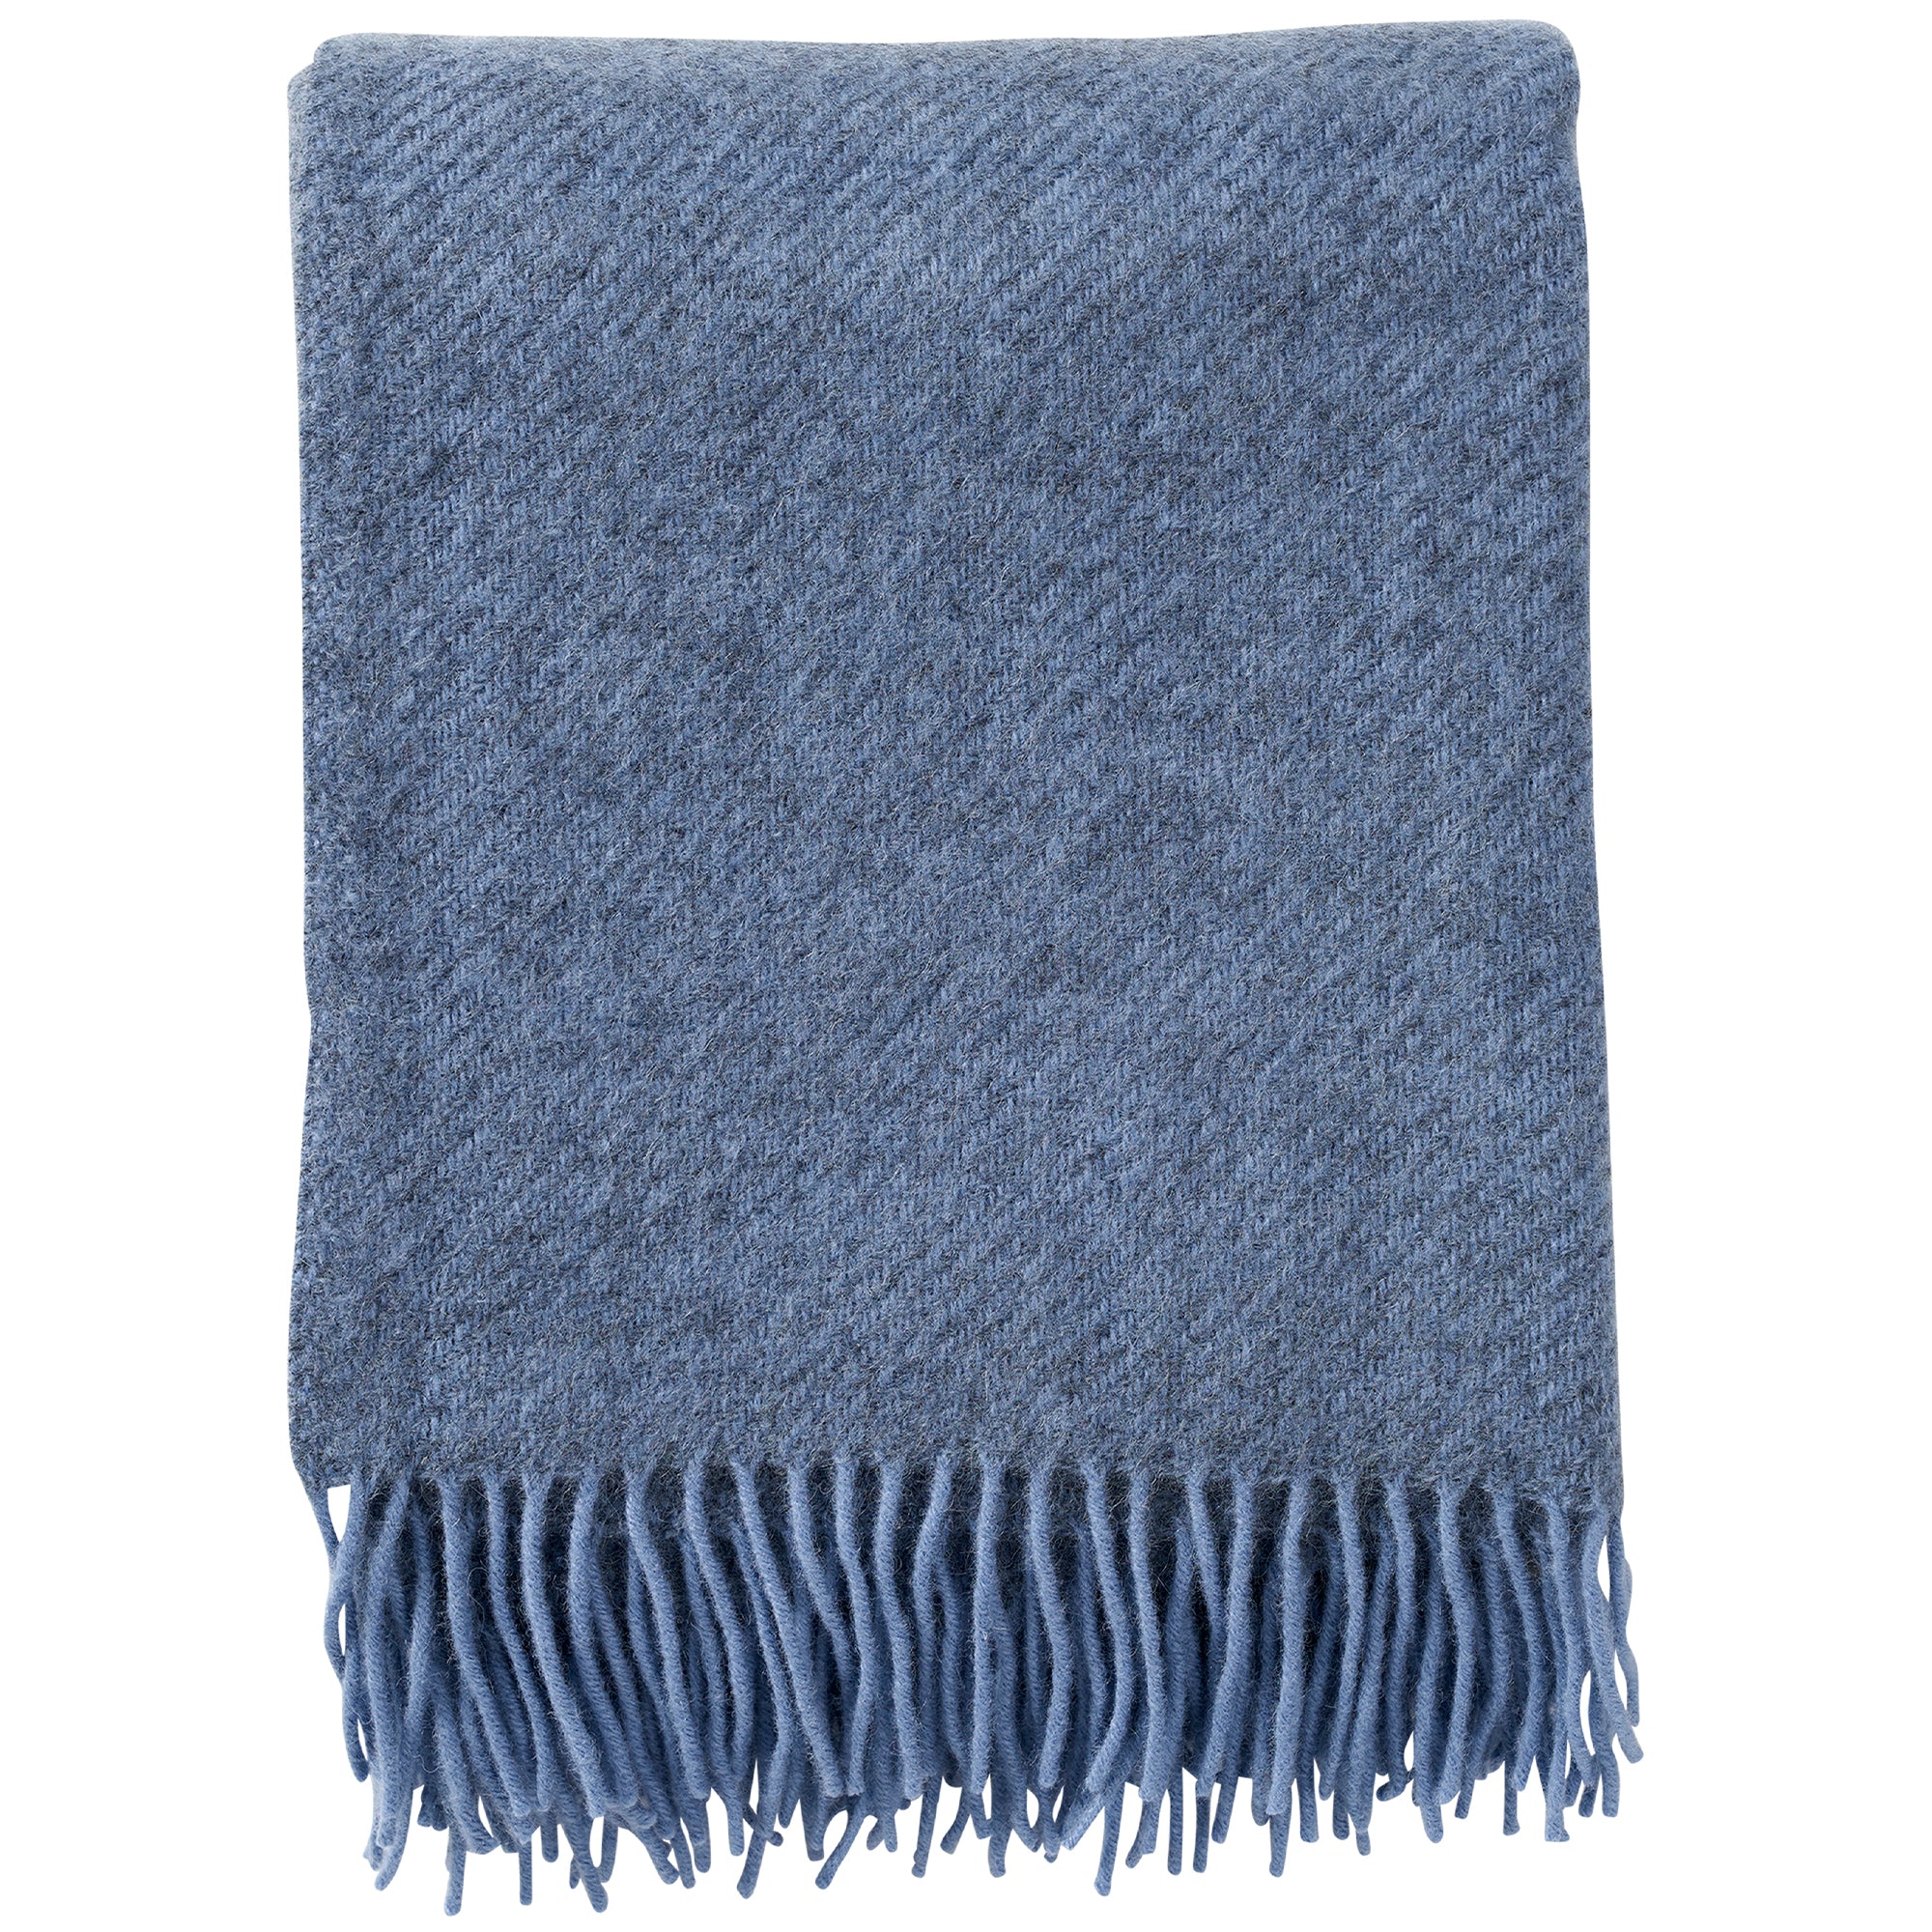 Gotland Infinity Blue 130x200cm Brushed Wool Throw